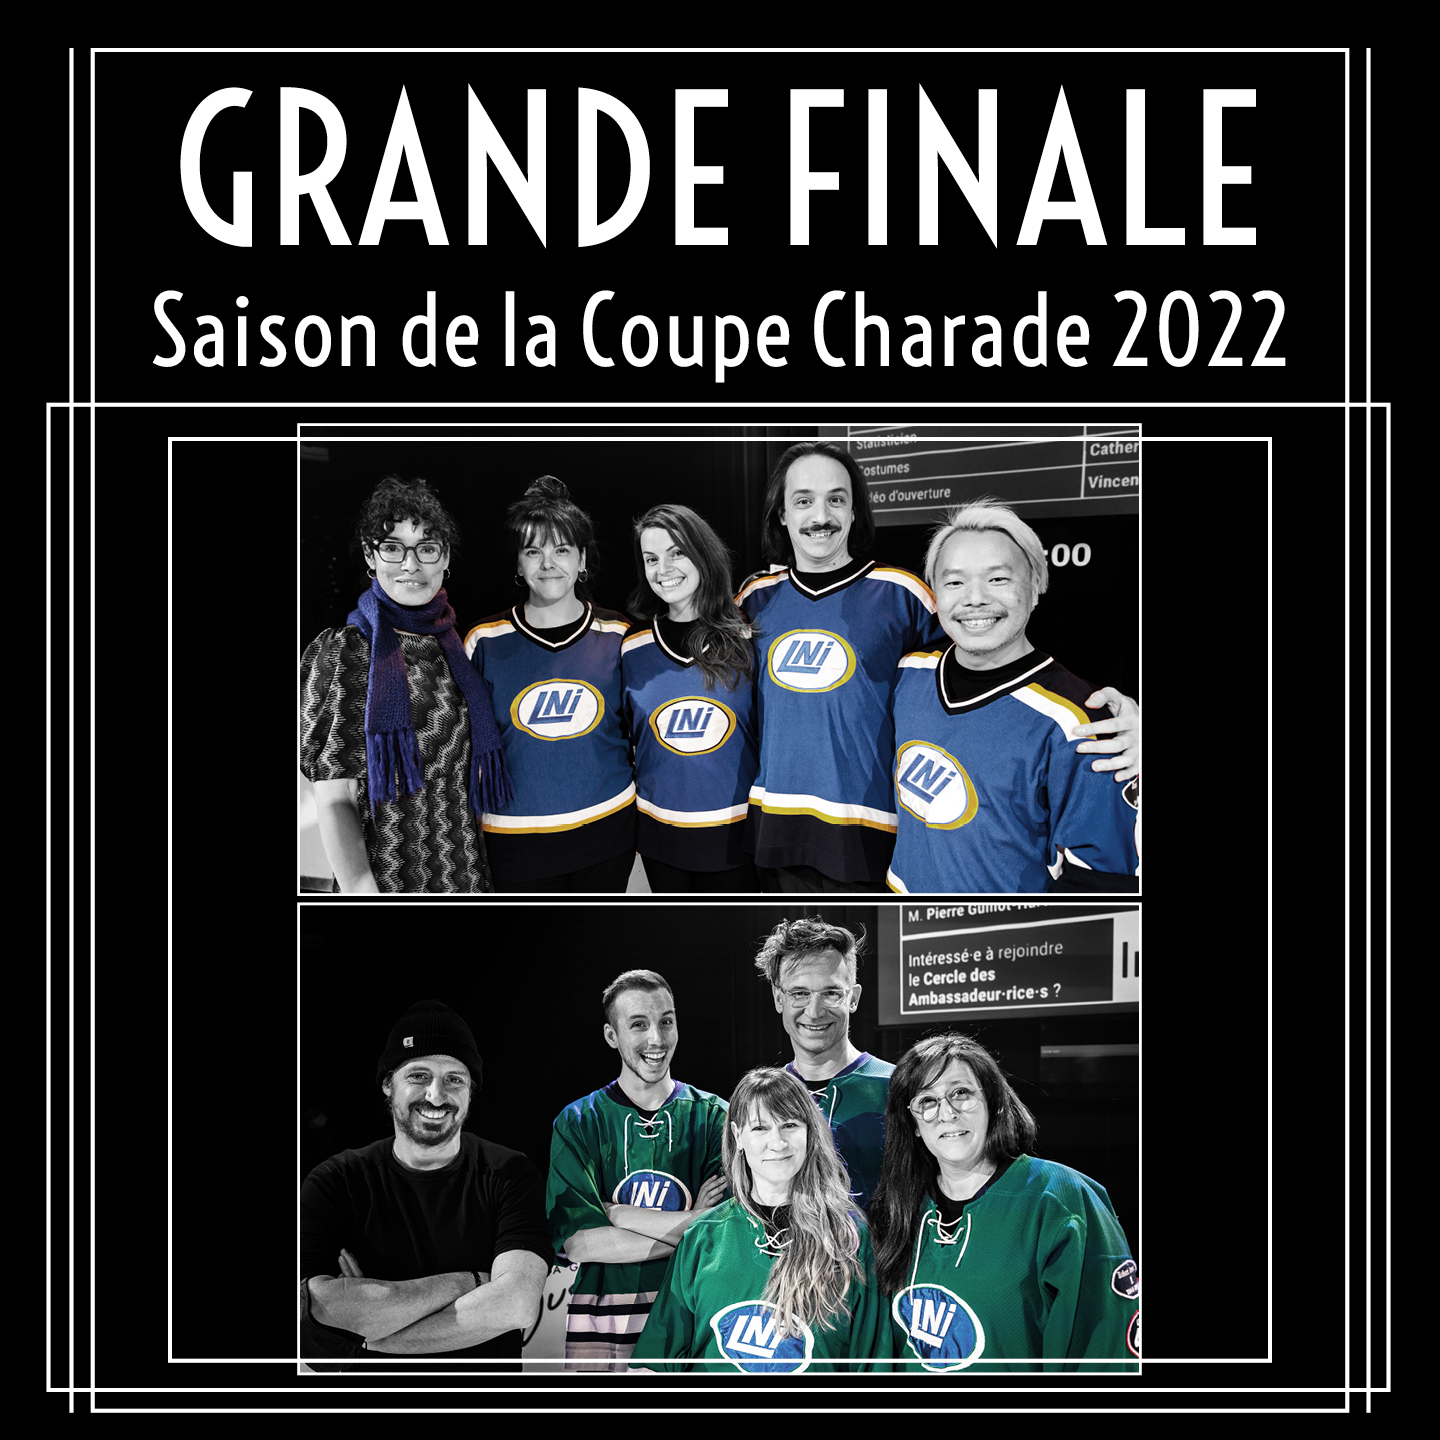 Saison de la Coupe Charade 2022 : GRANDE FINALE !